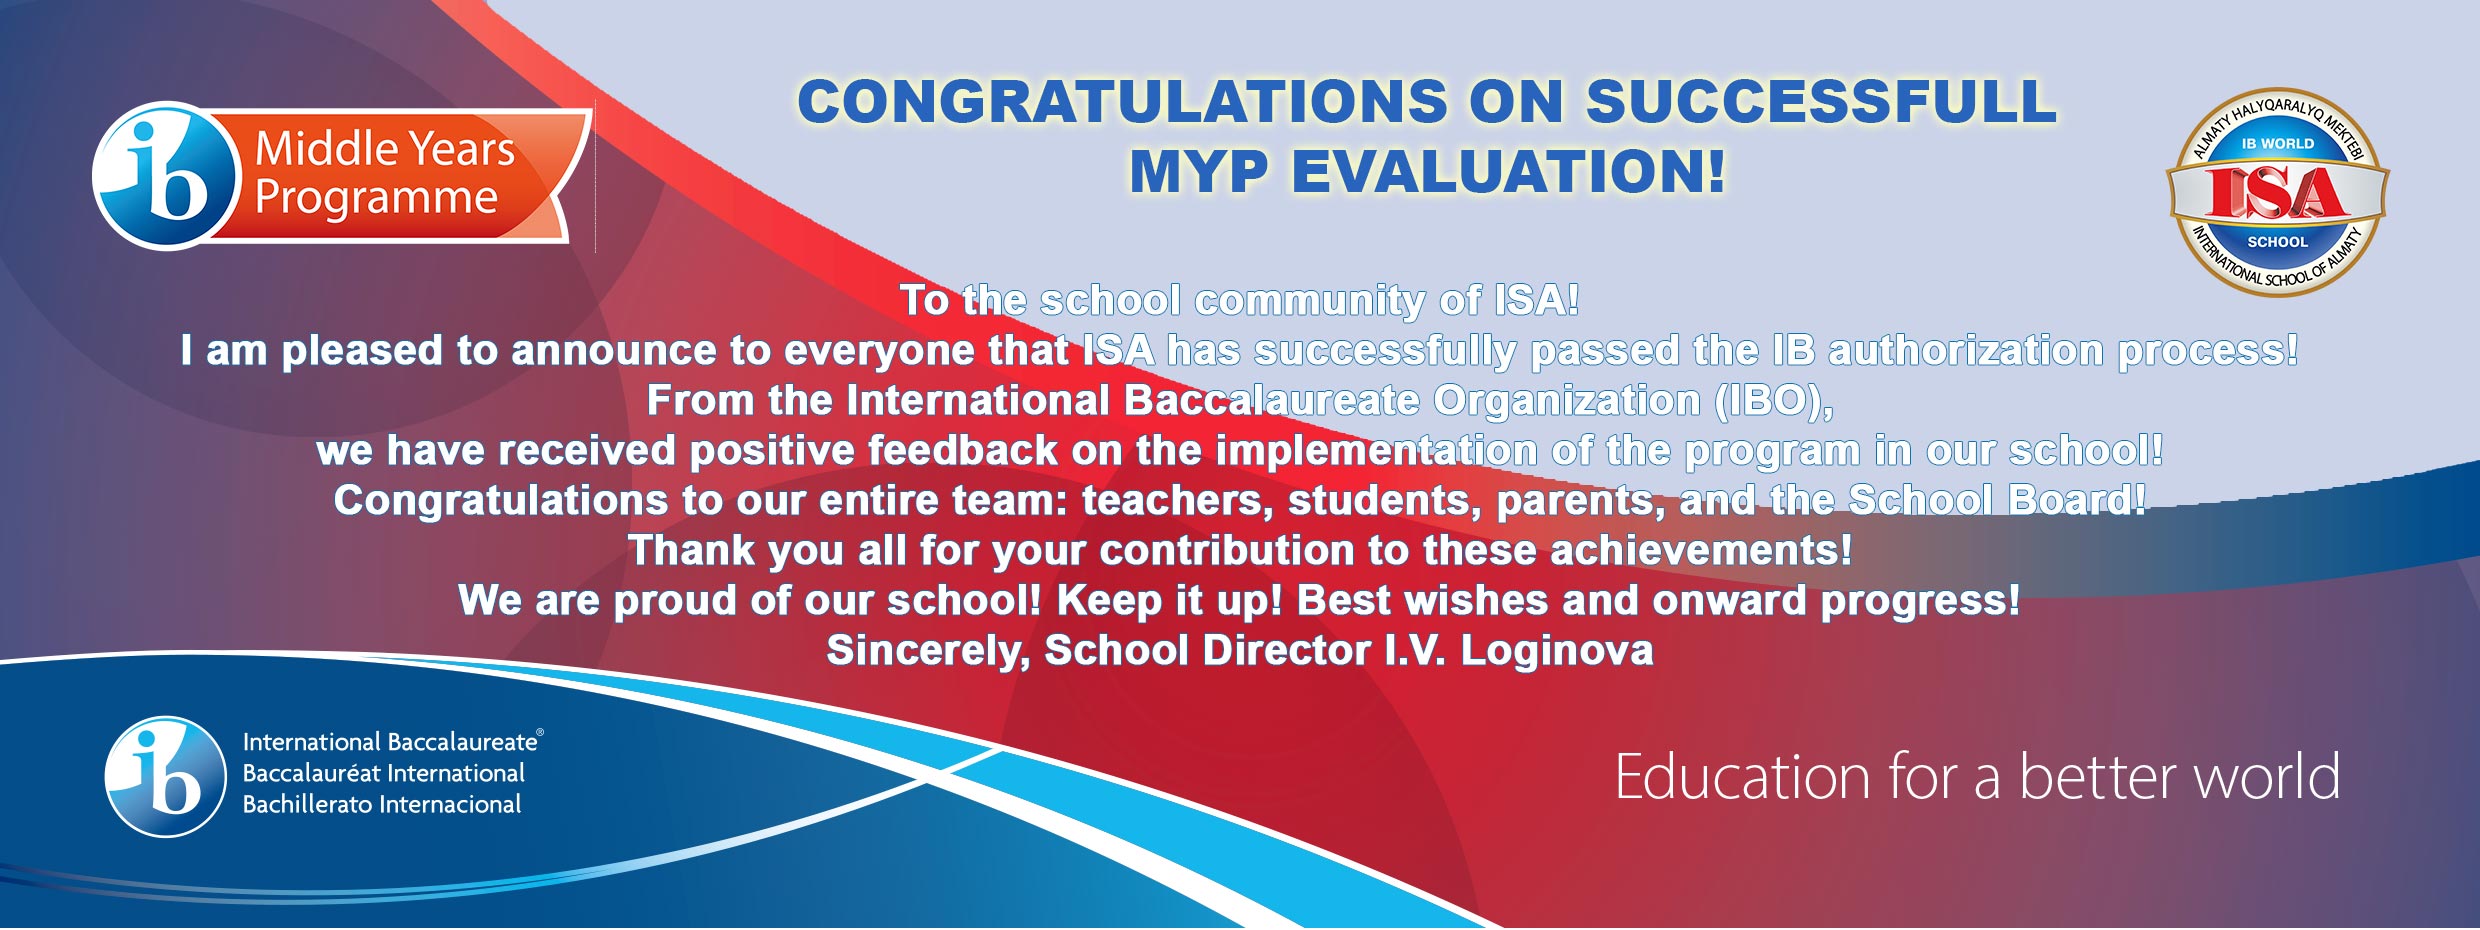 Congratulations on successfull MYP evaluation!